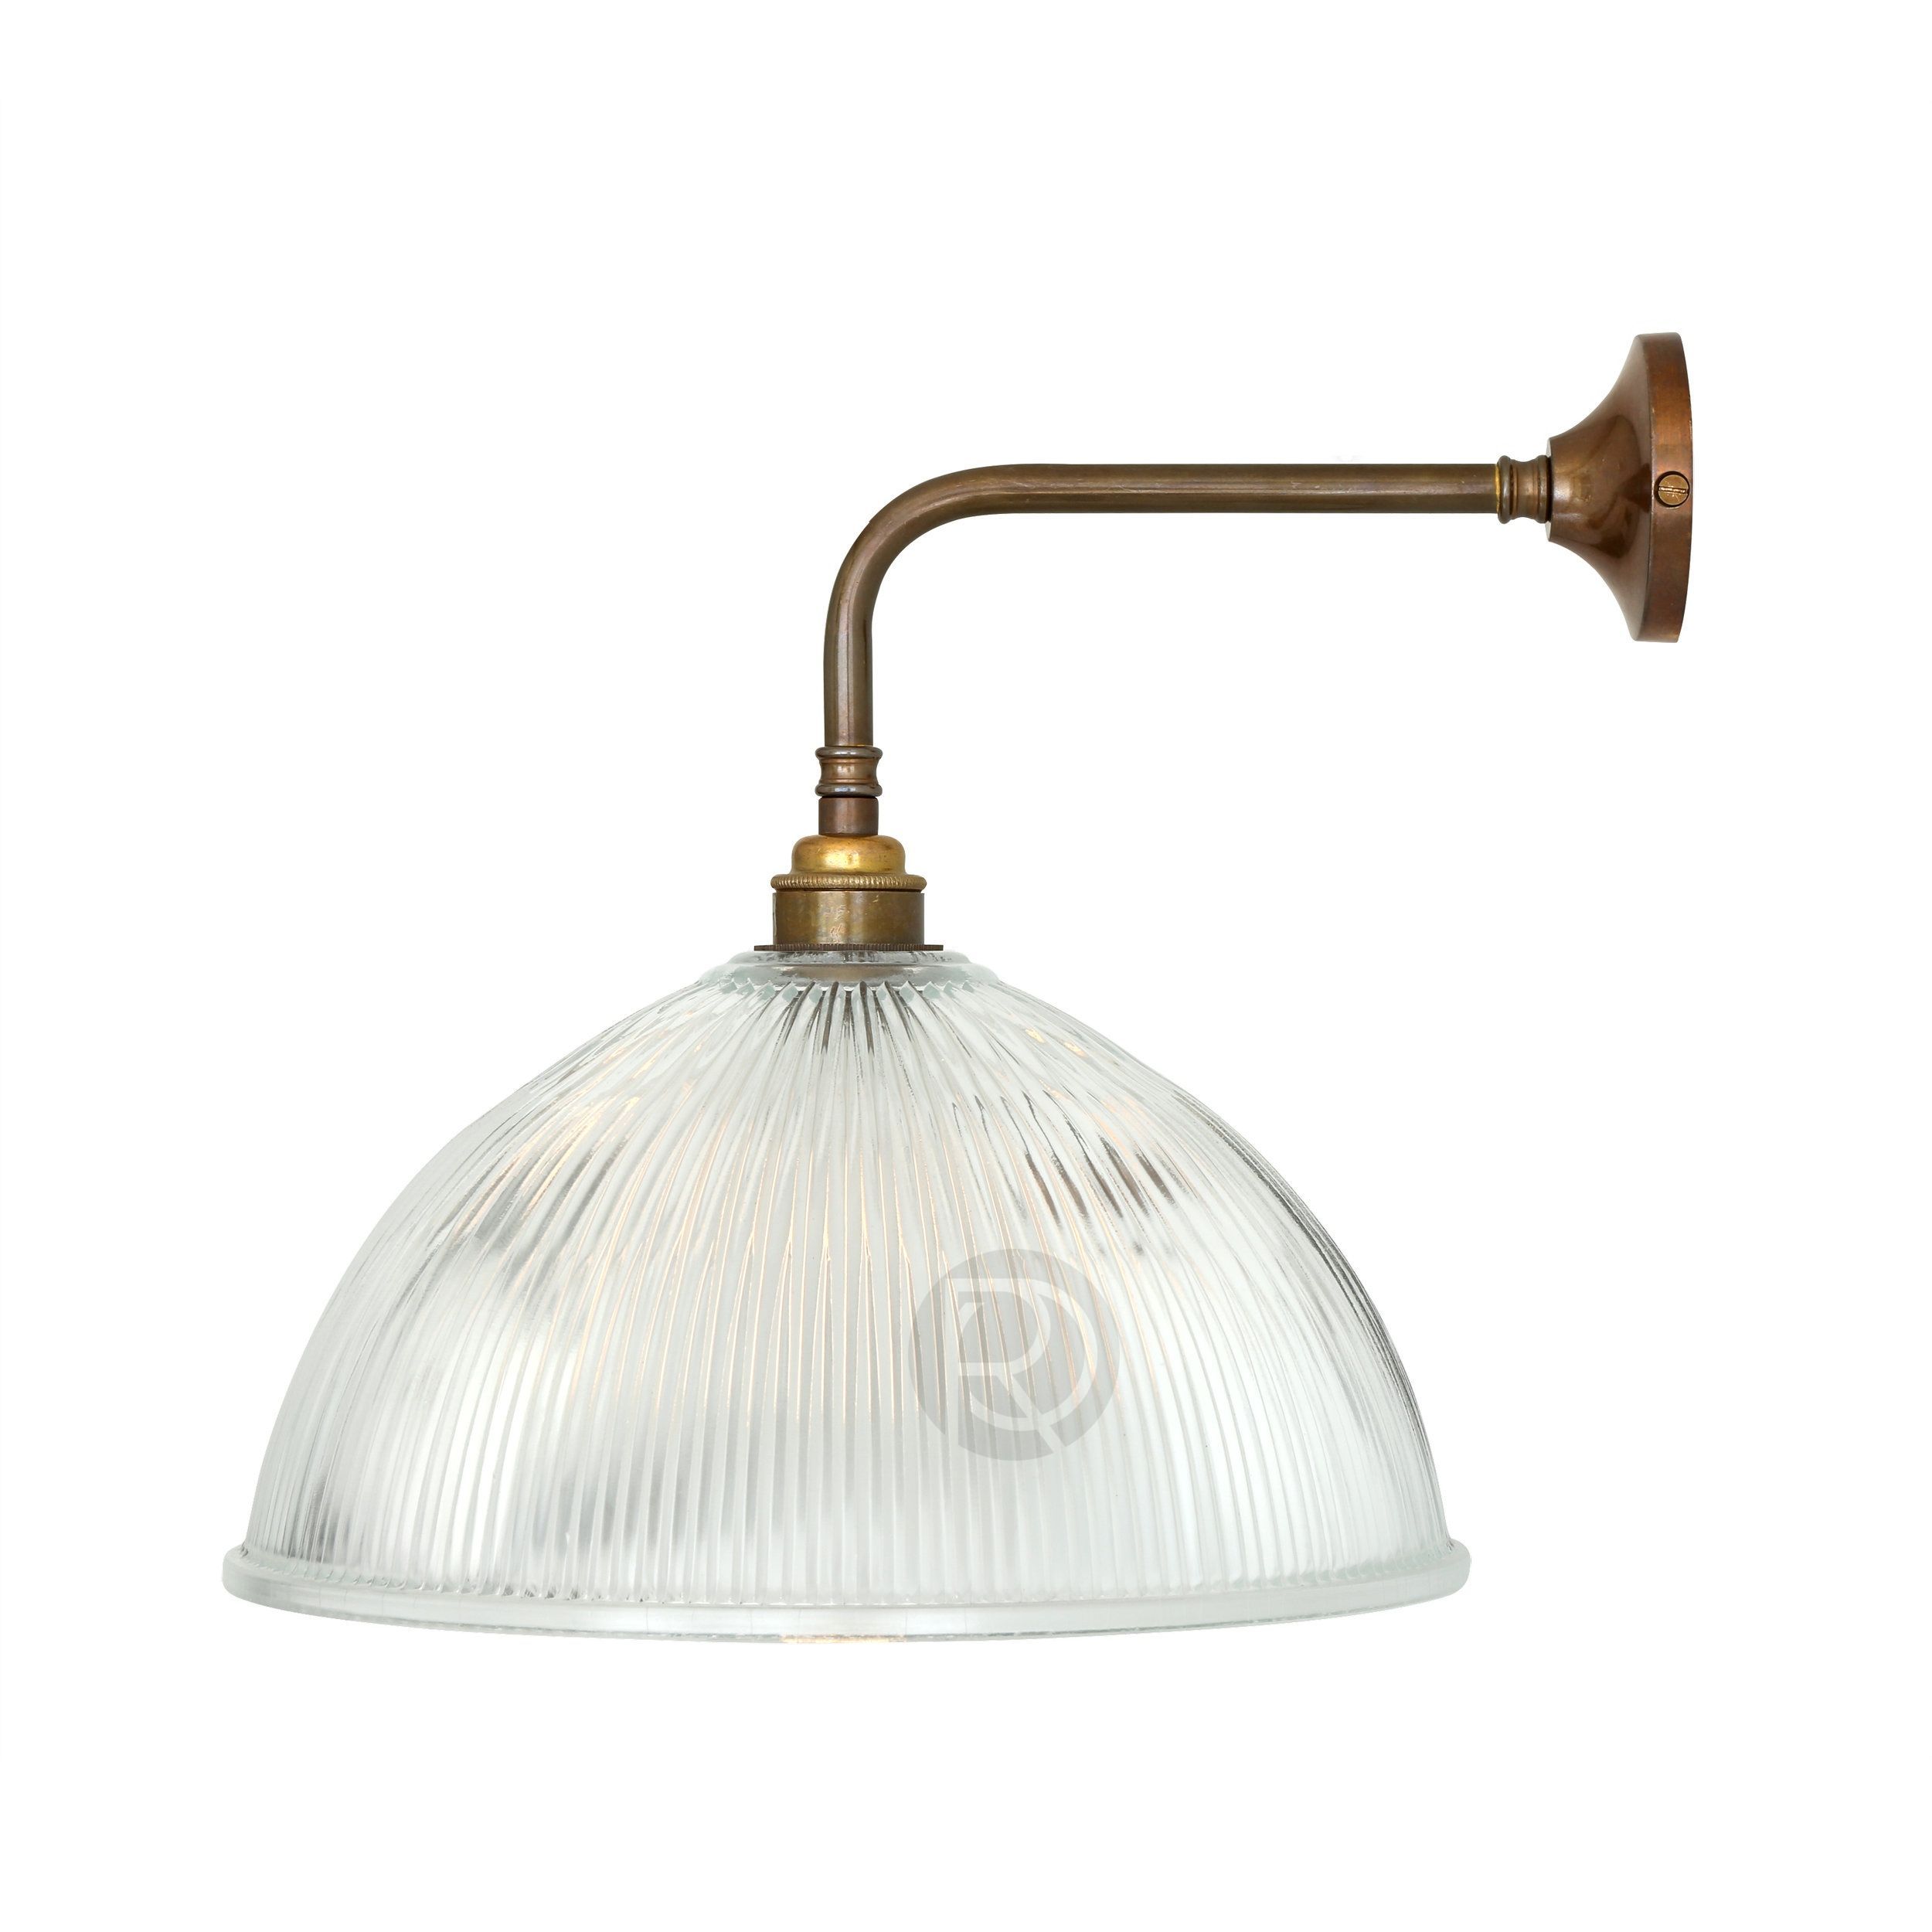 Wall lamp (Sconce) NOVA by Mullan Lighting